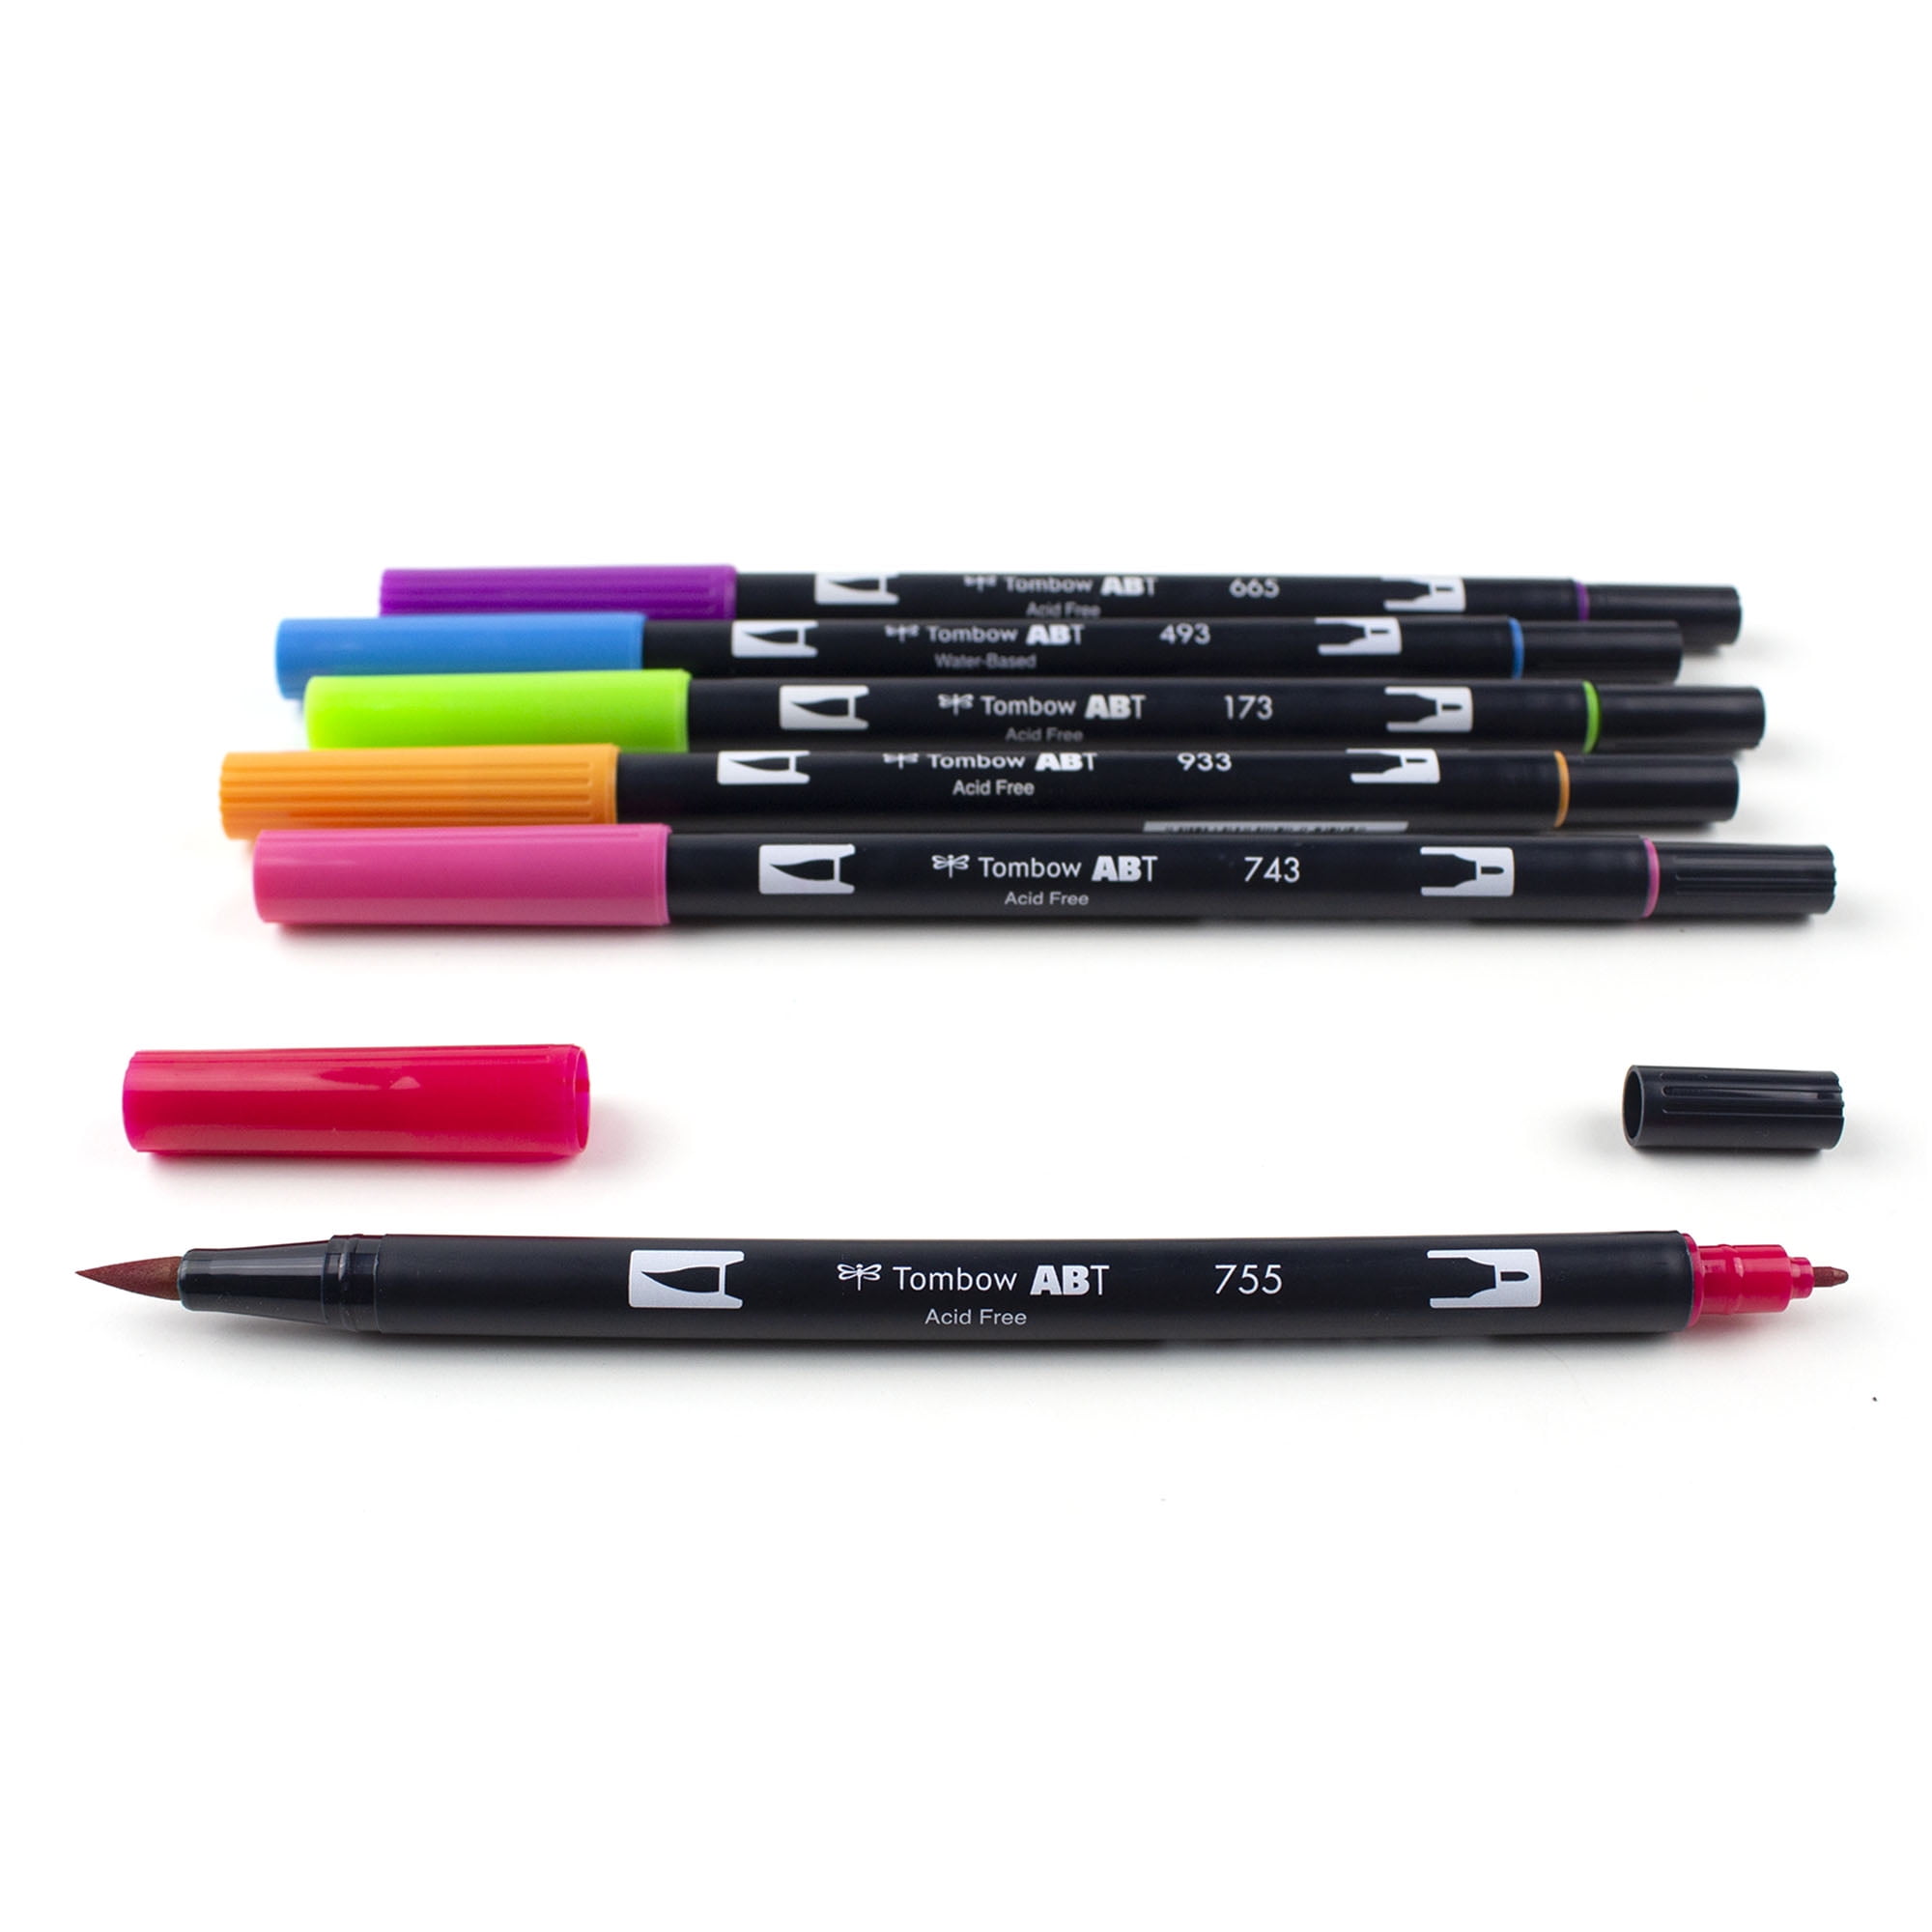 Dual Brush Pen Art Markers: Bright - Home